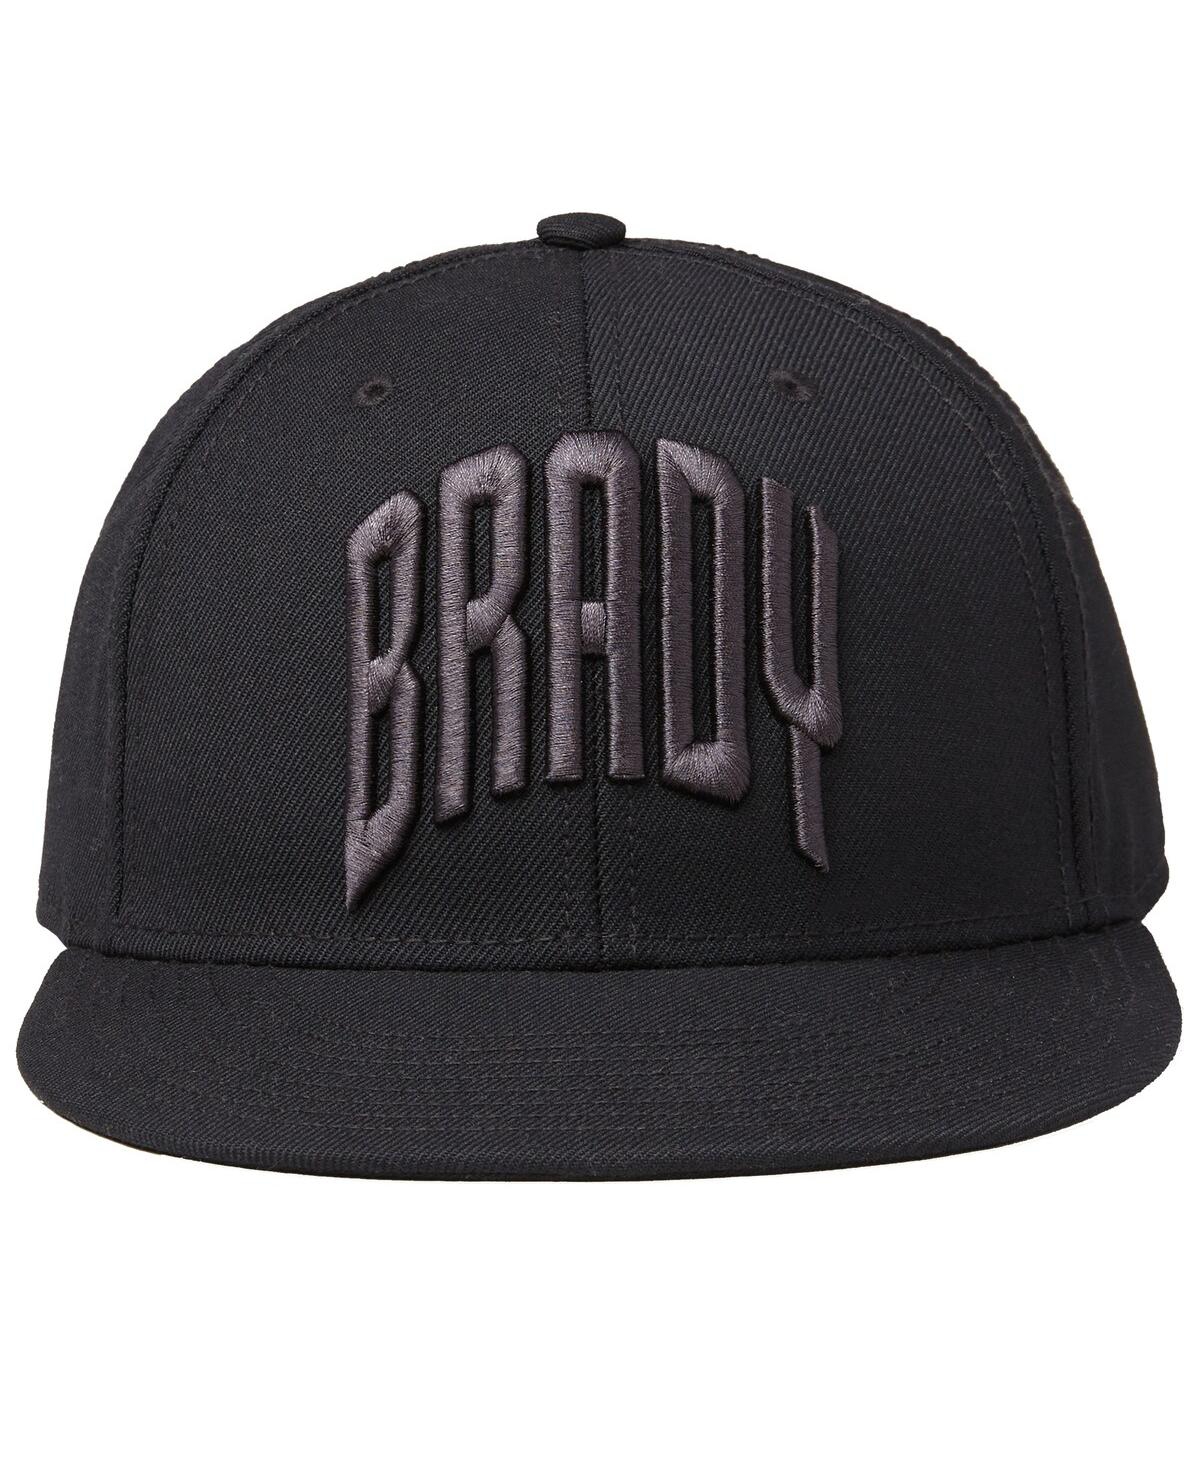 Men's Brady Black Fitted Hat - Black